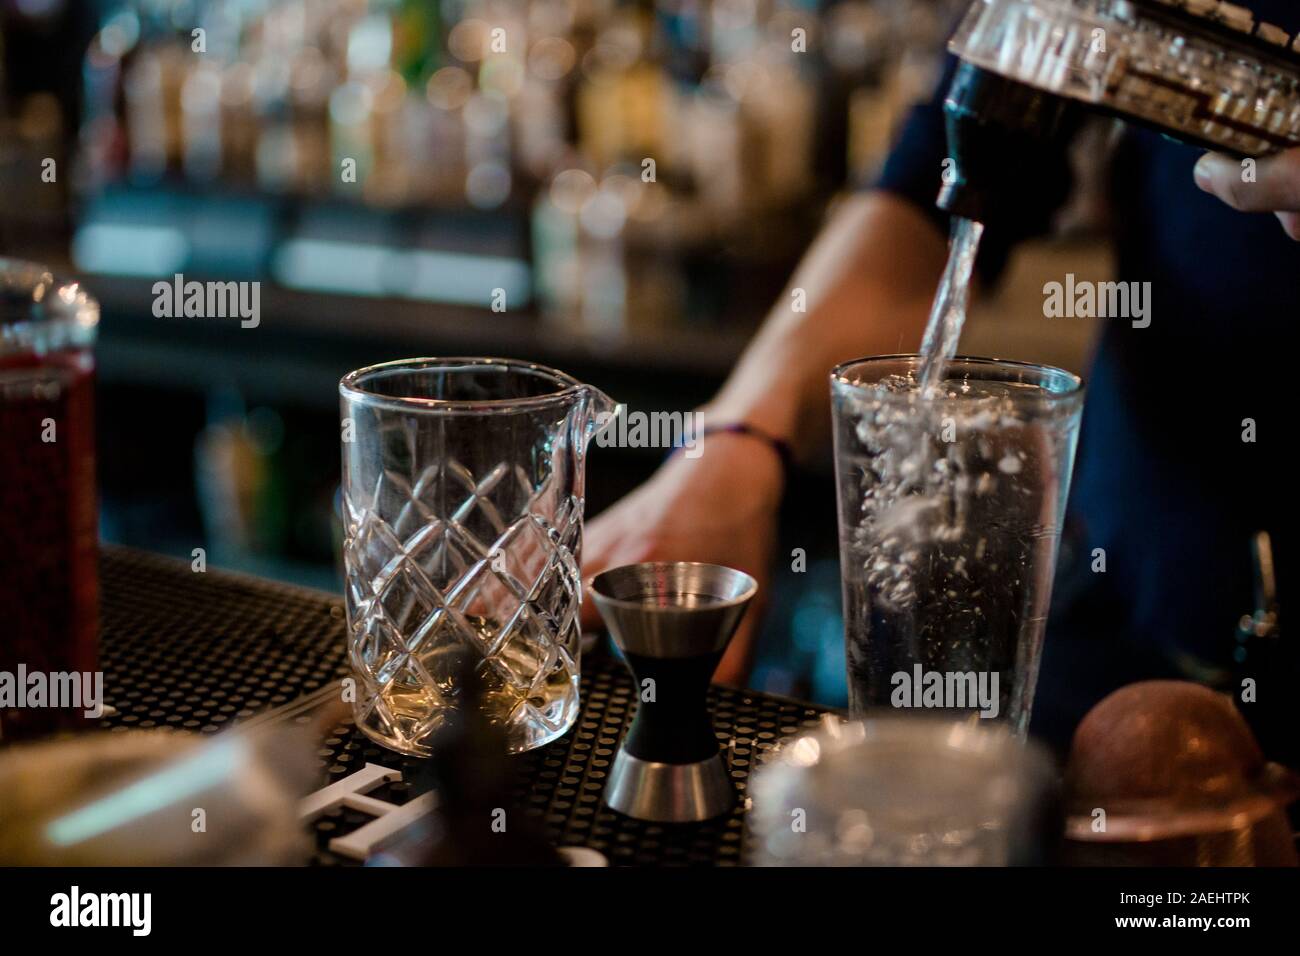 A bartender uses a soda dispenser to pour soda into a glass at a bar Stock Photo